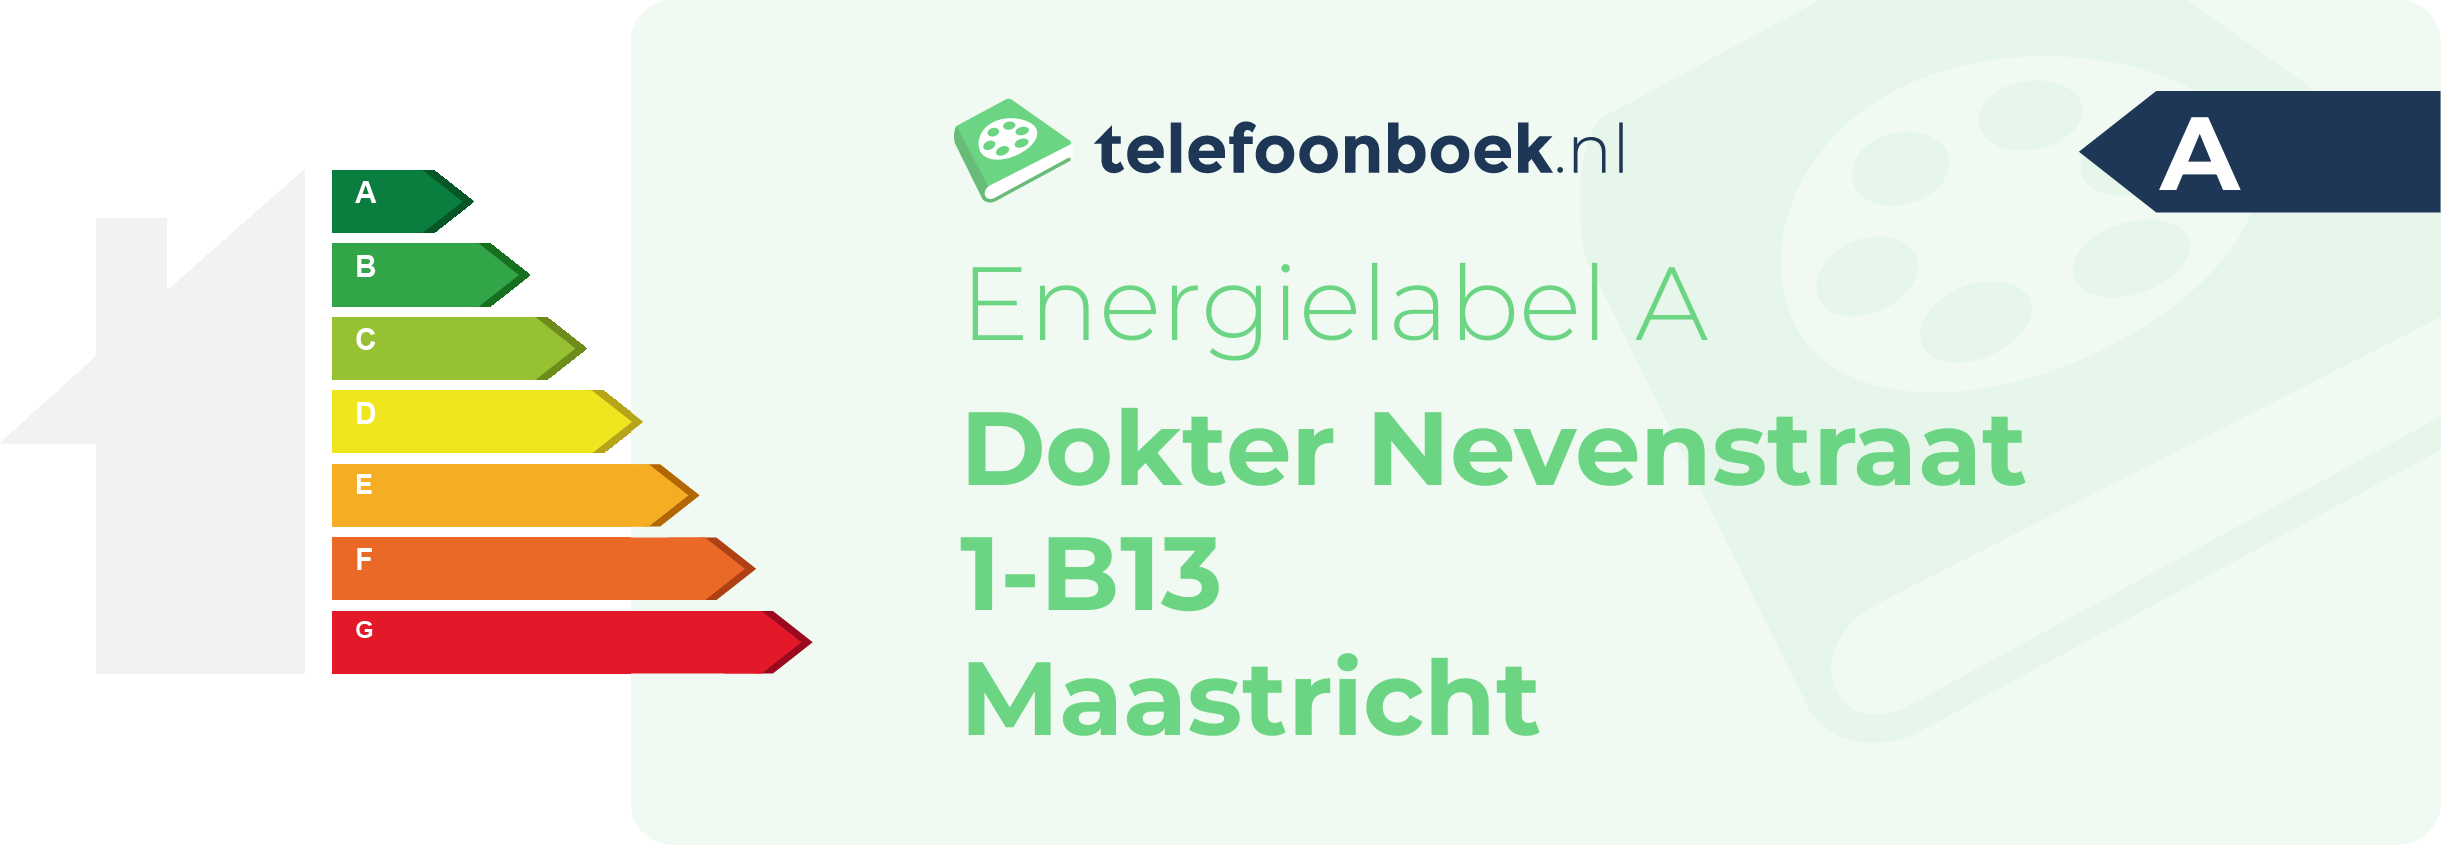 Energielabel Dokter Nevenstraat 1-B13 Maastricht